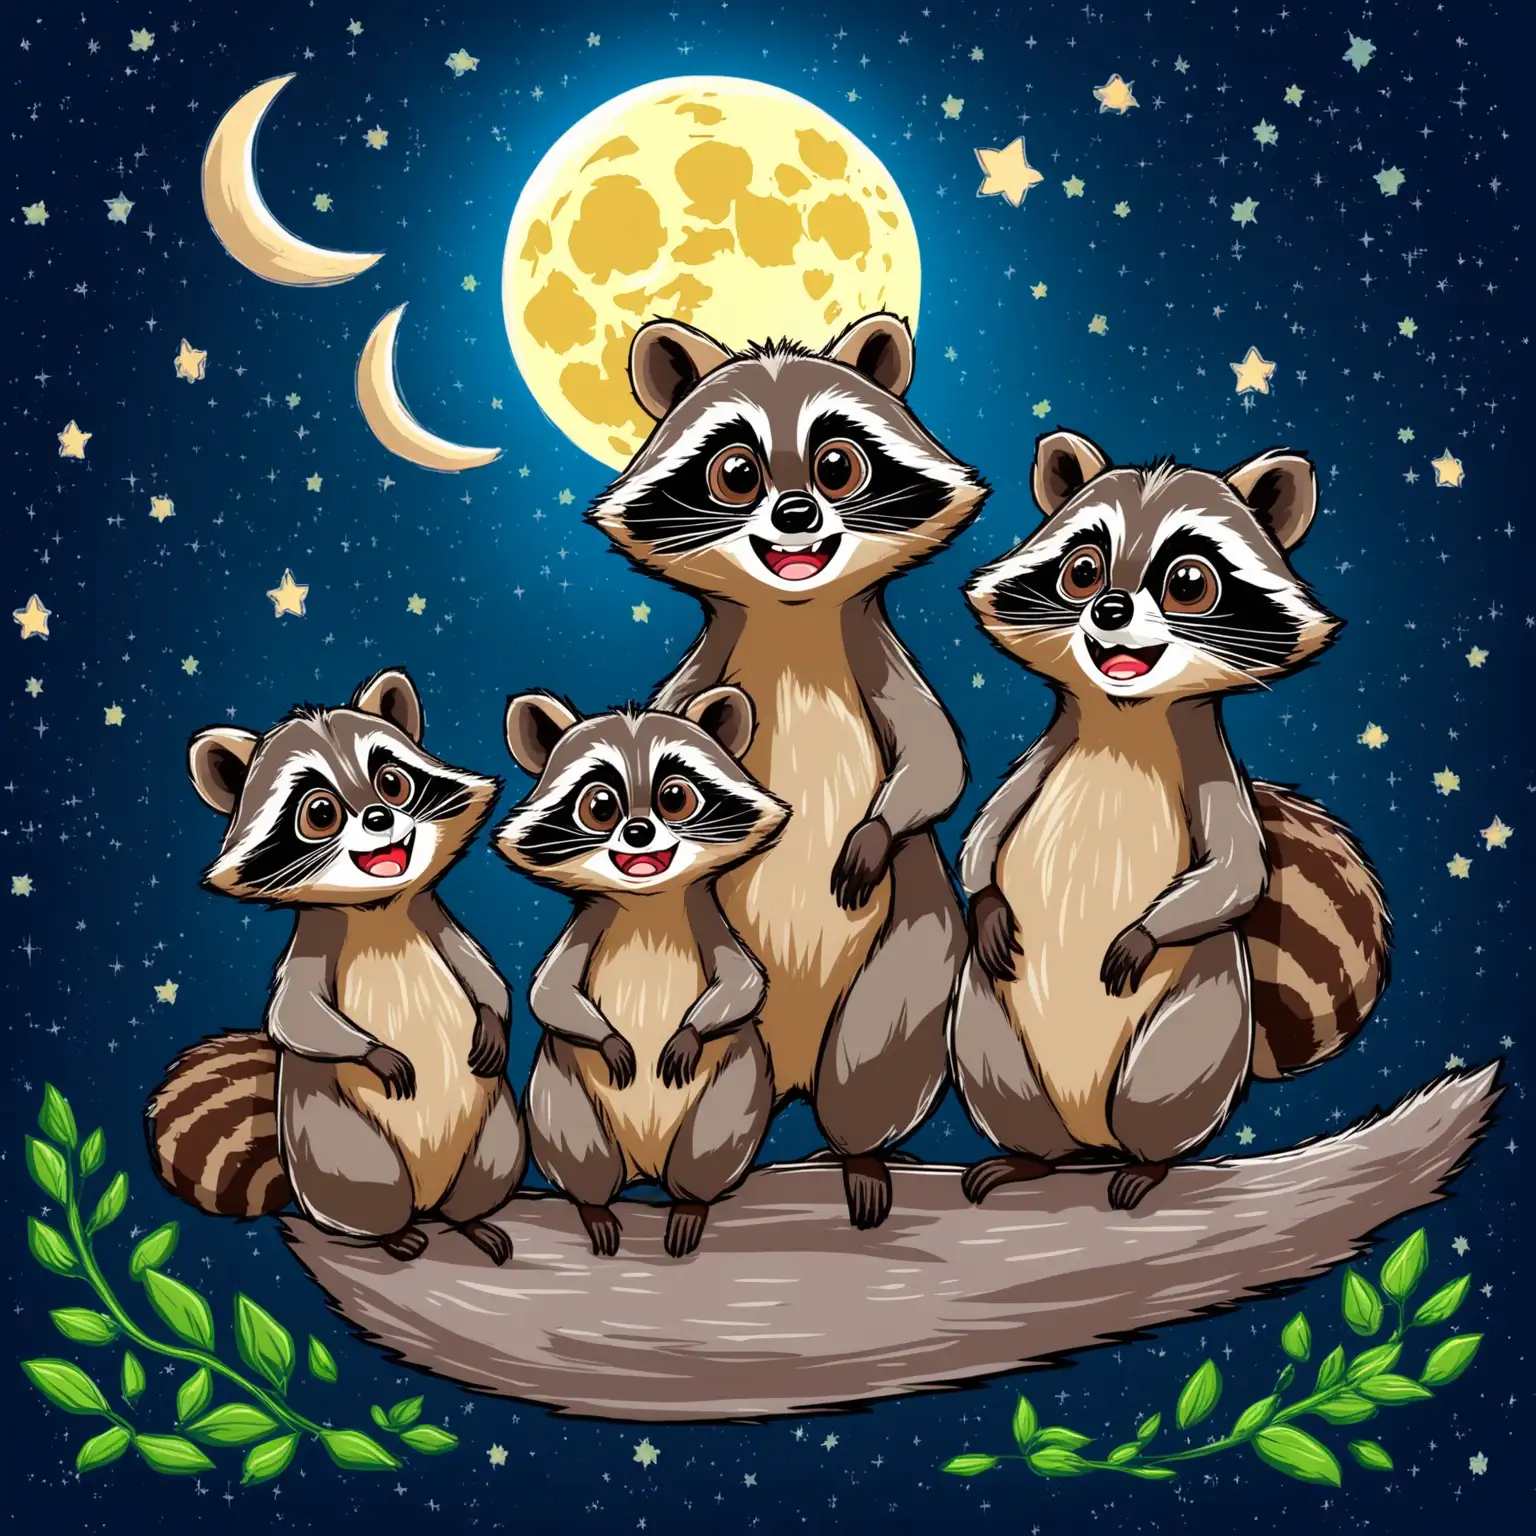 Adorable Cartoon Raccoon Family Gazing at the Moon